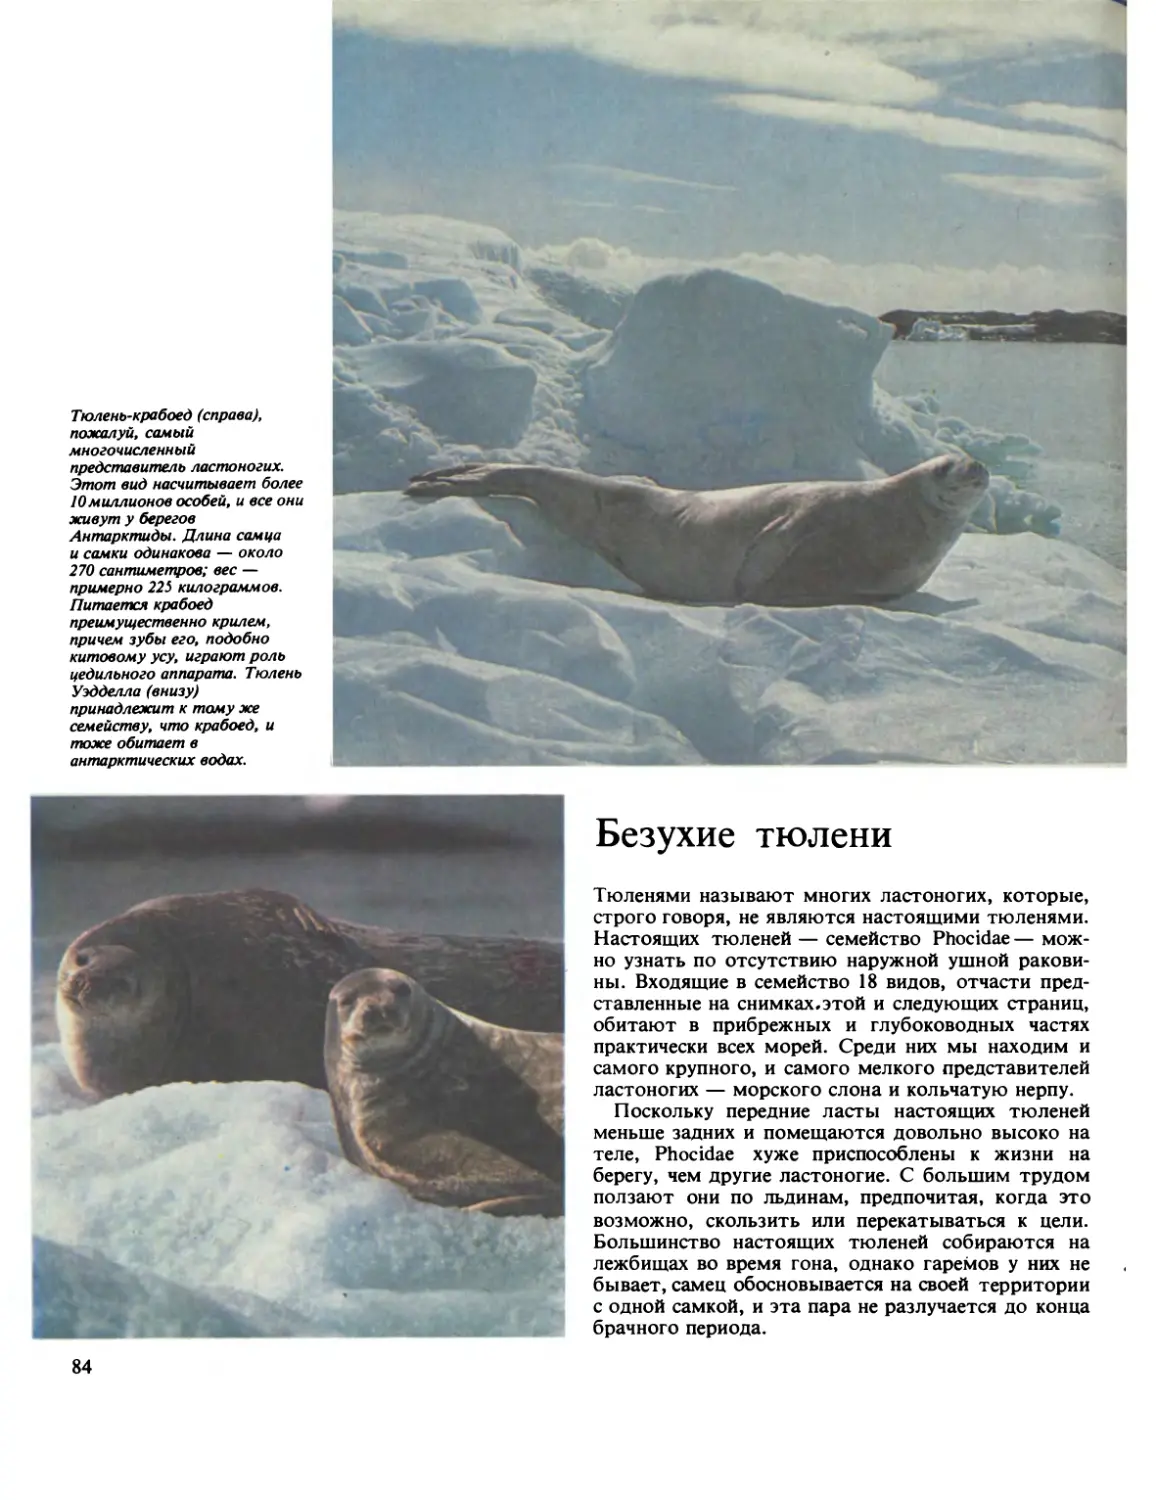 Безухие тюлени